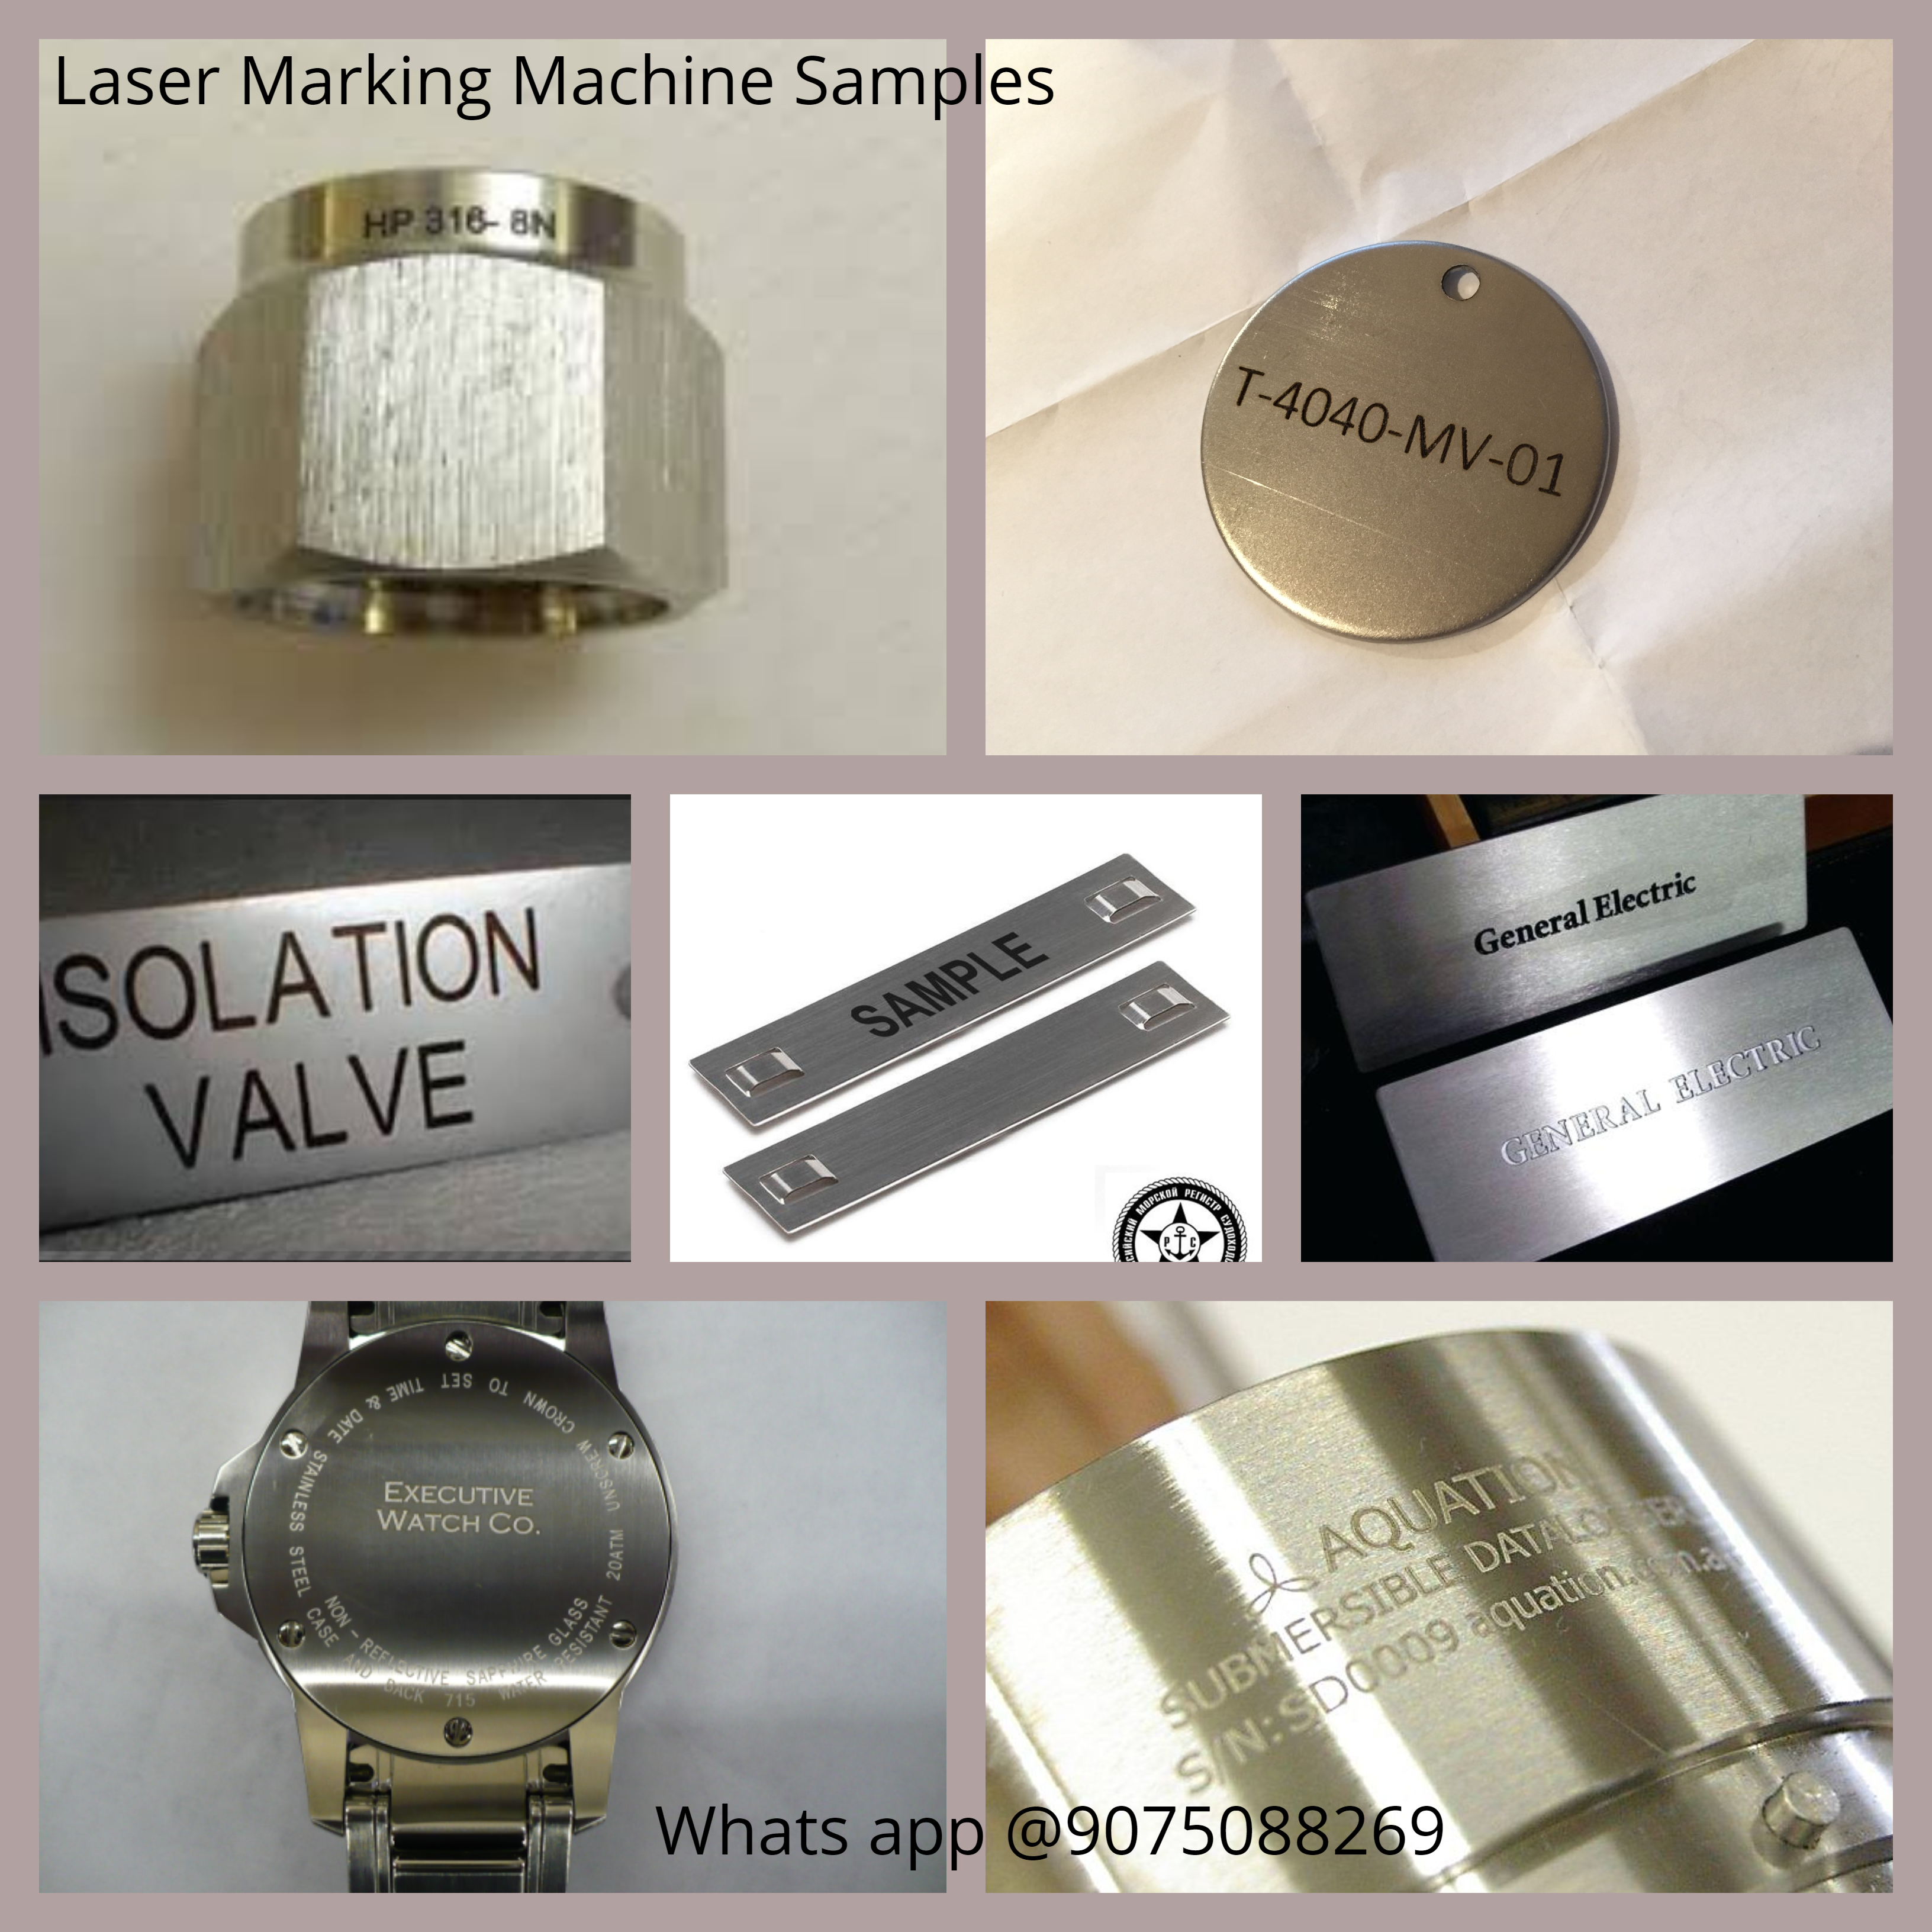 30watt/50watt Industrial Fiber Laser Marking Machine